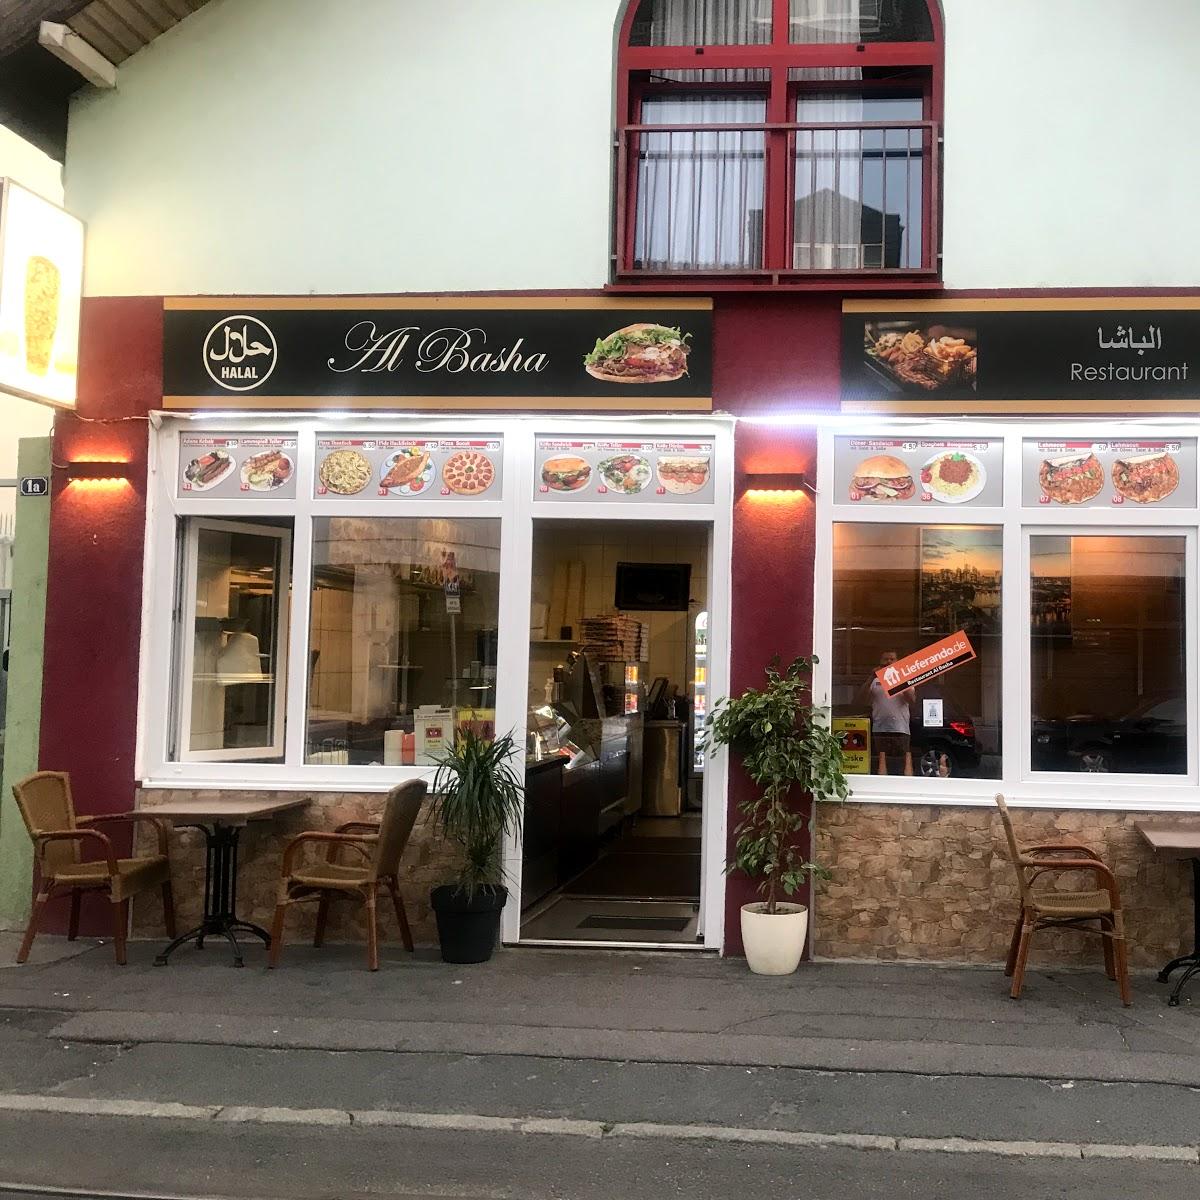 Restaurant "Al basha" in Frankfurt am Main